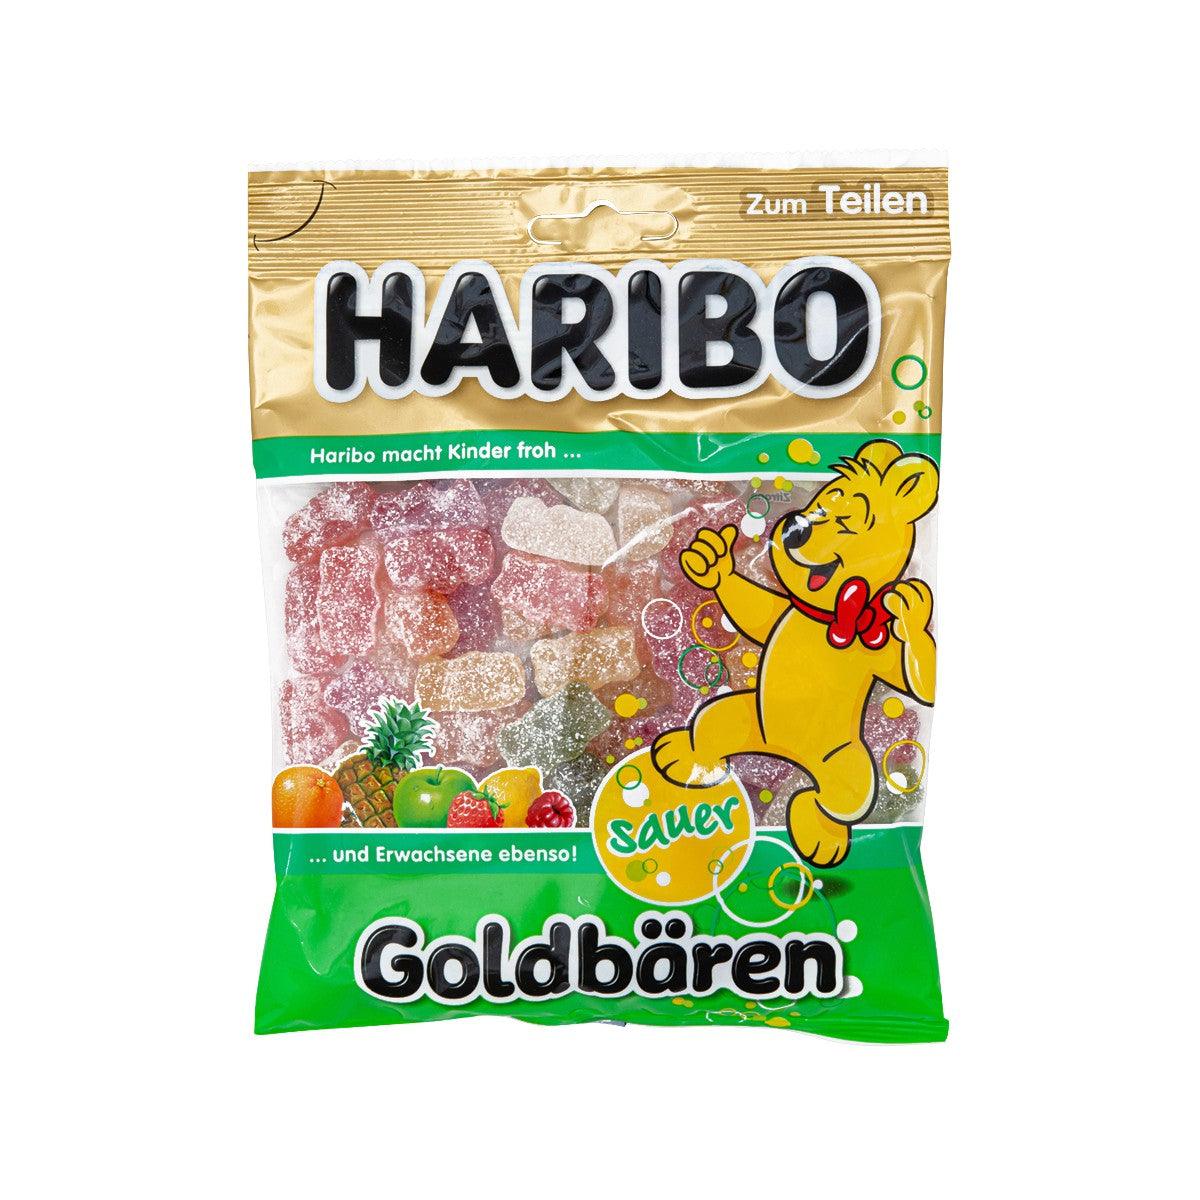 Haribo Goldbären sauer minis - Gold Bears Sour minis